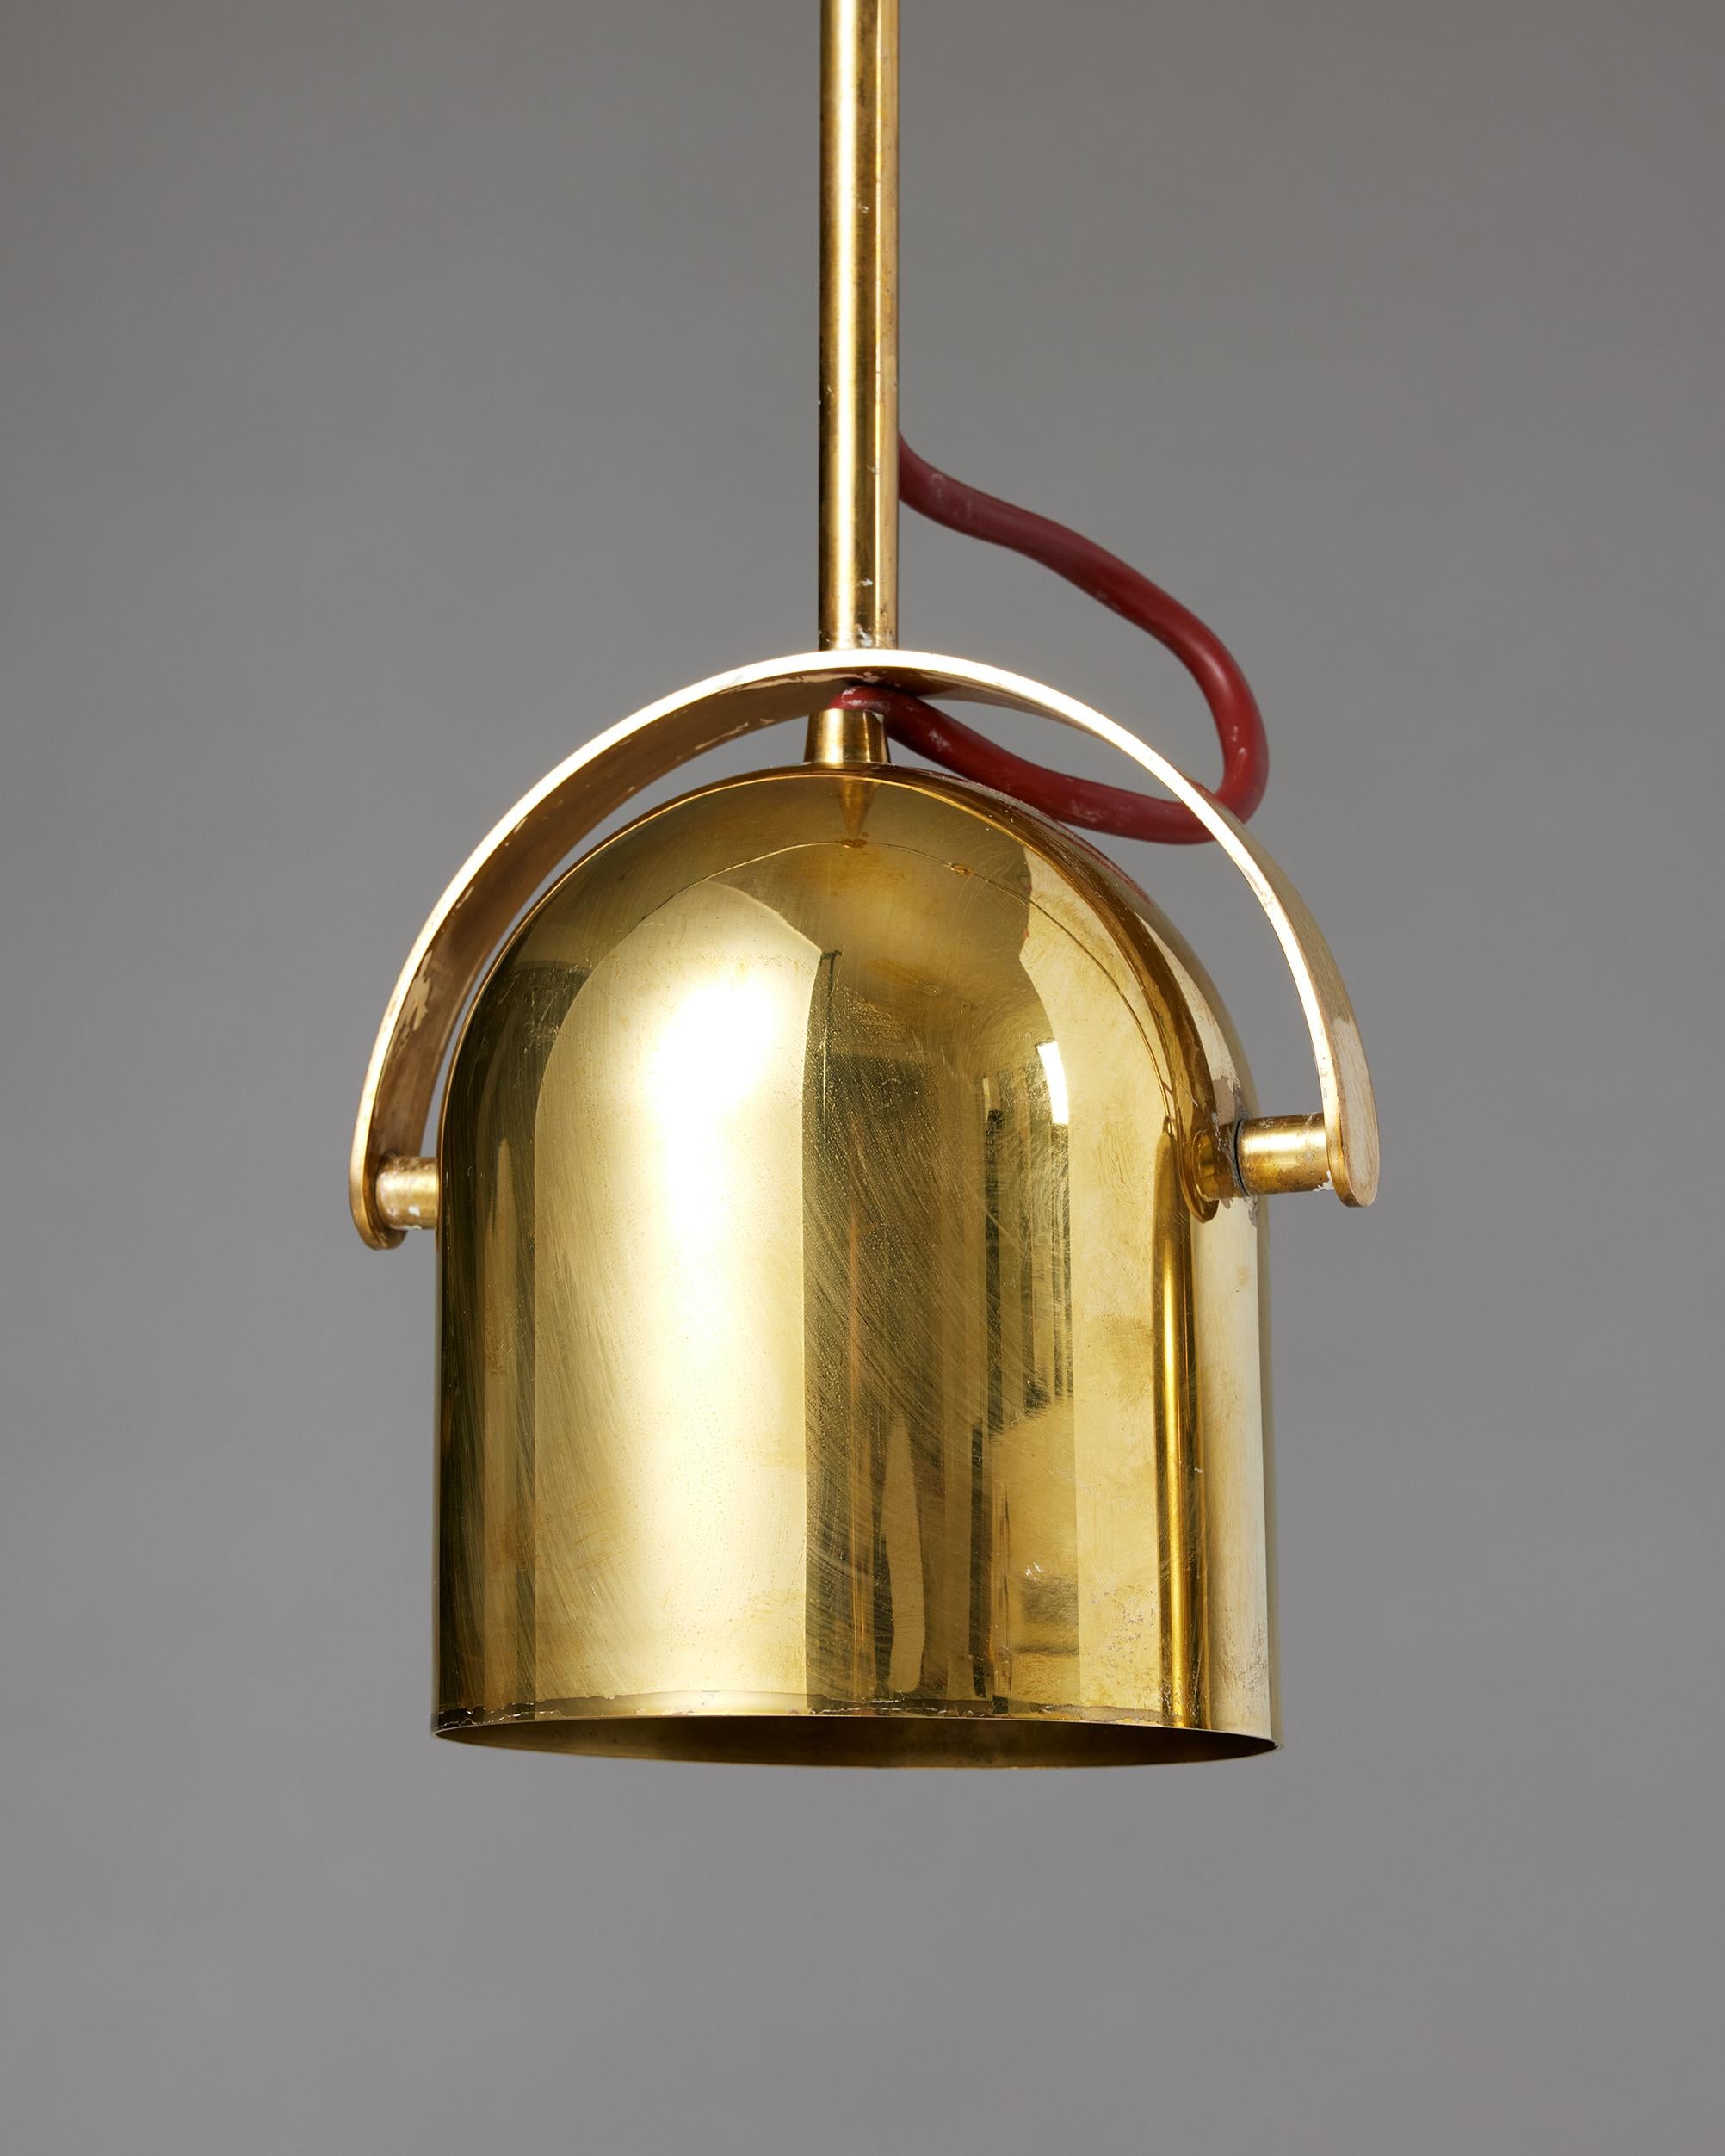 Ceiling lamp, model A203, designed by Alvar Aalto for Valaistustyö, Finland For Sale 1